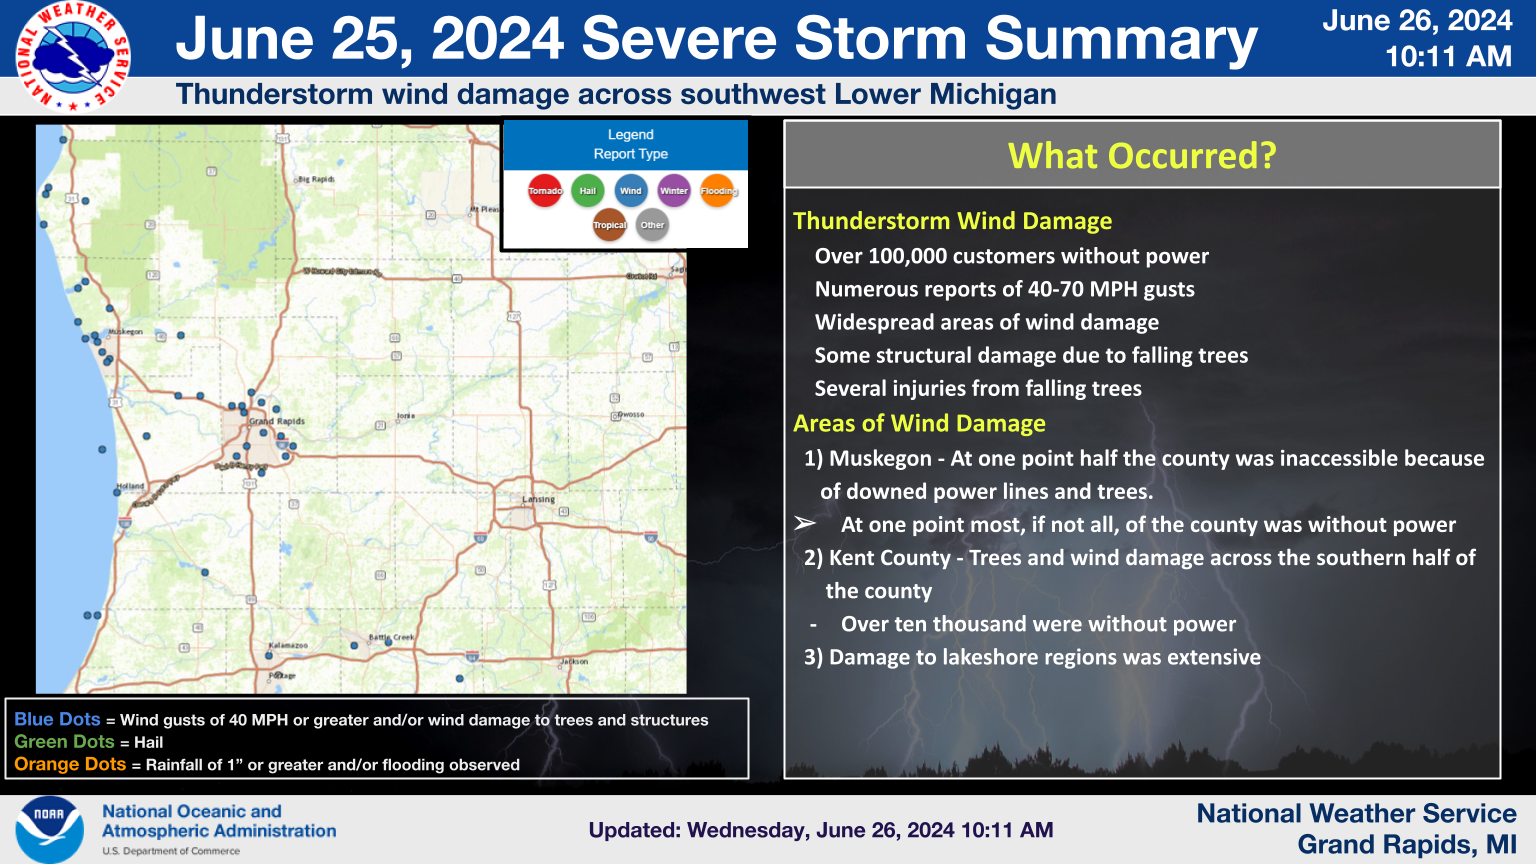 Storm damage map for June 25, 2024